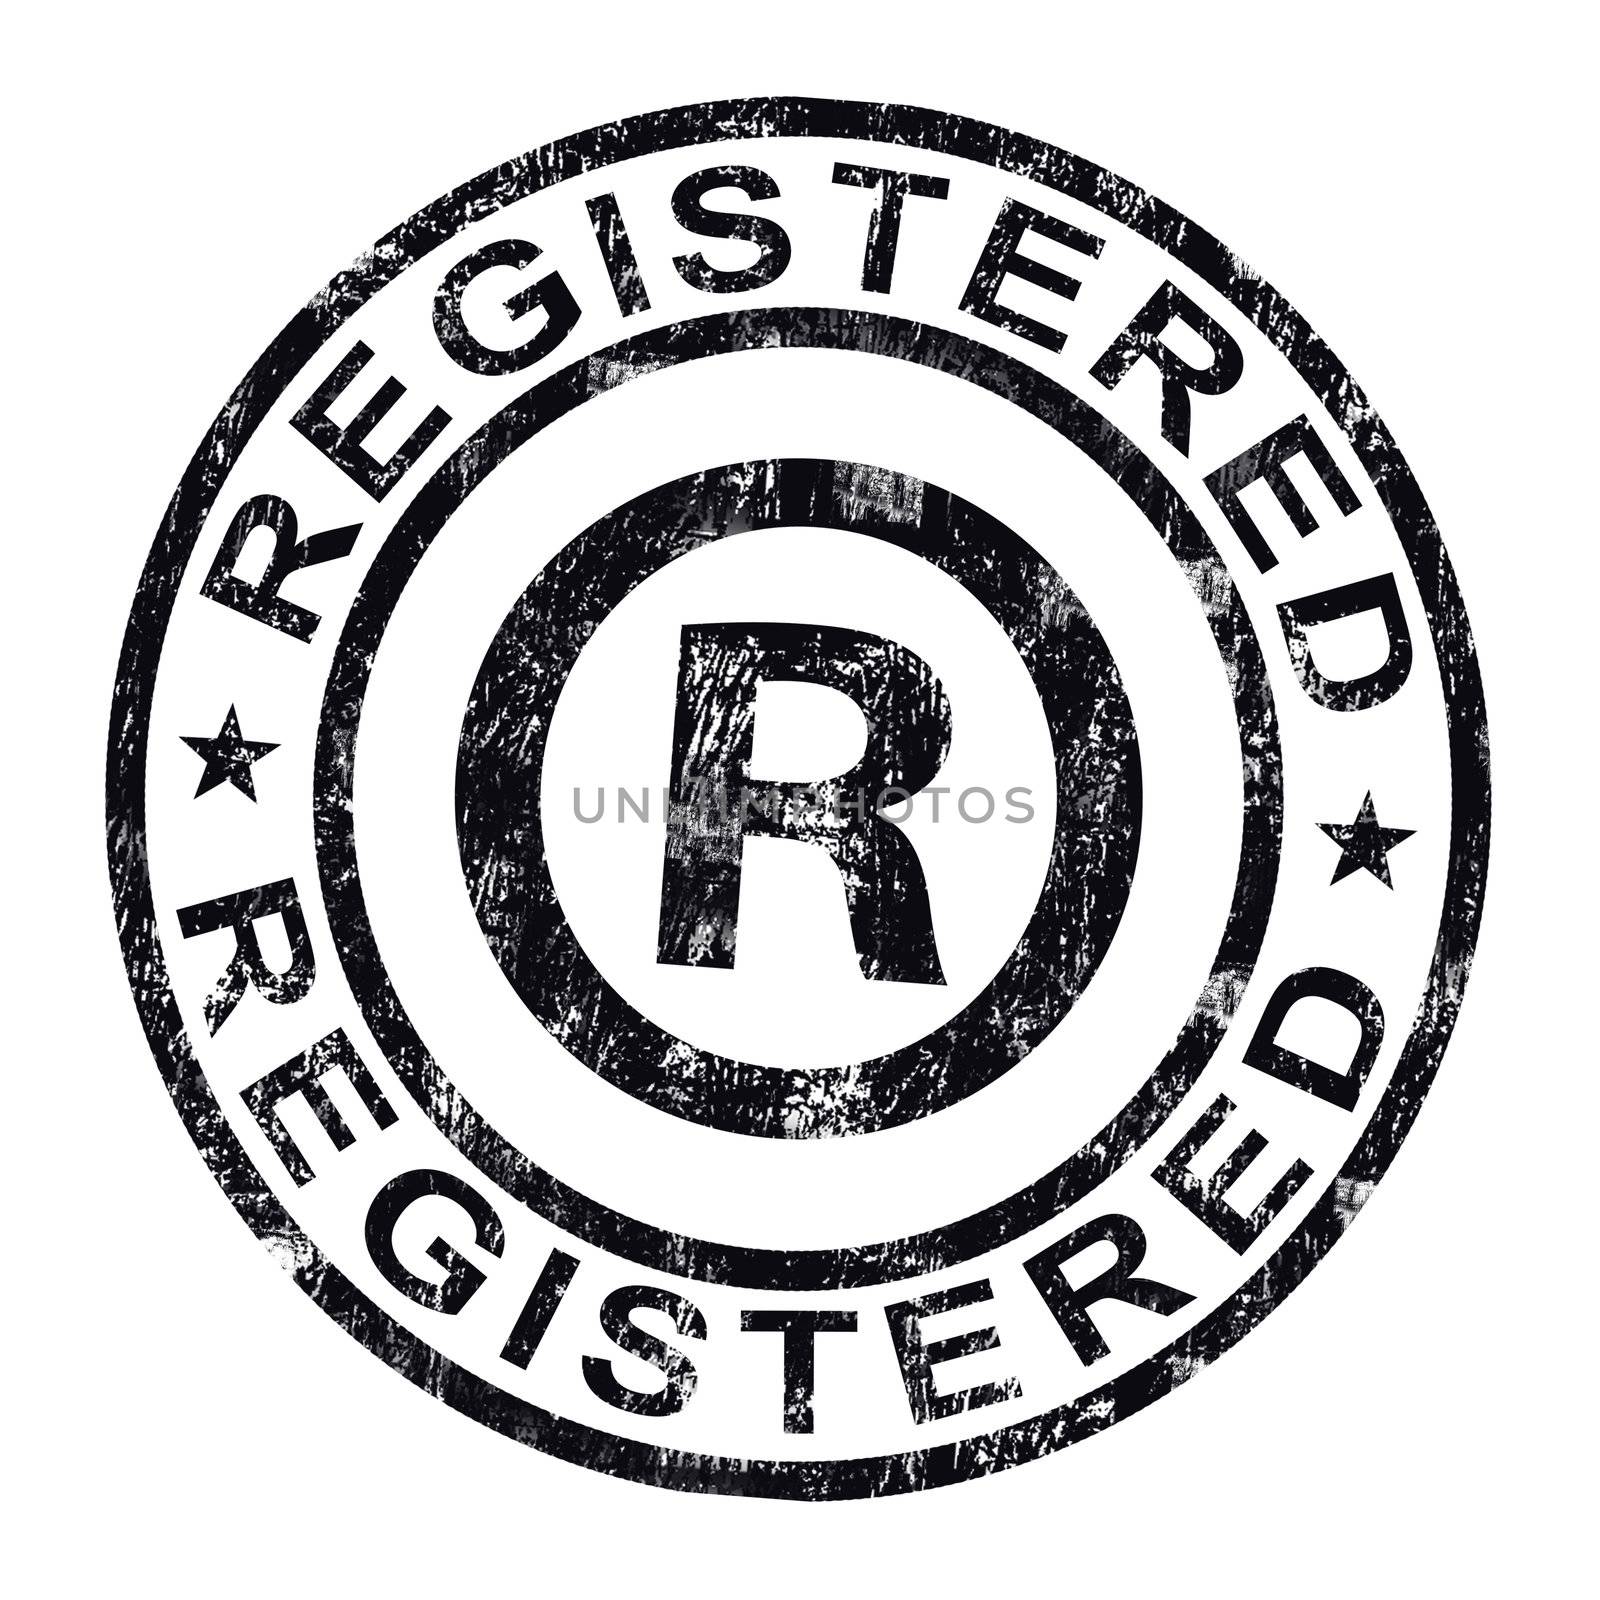 Registered Stamp Showing Copyright Or Trademark